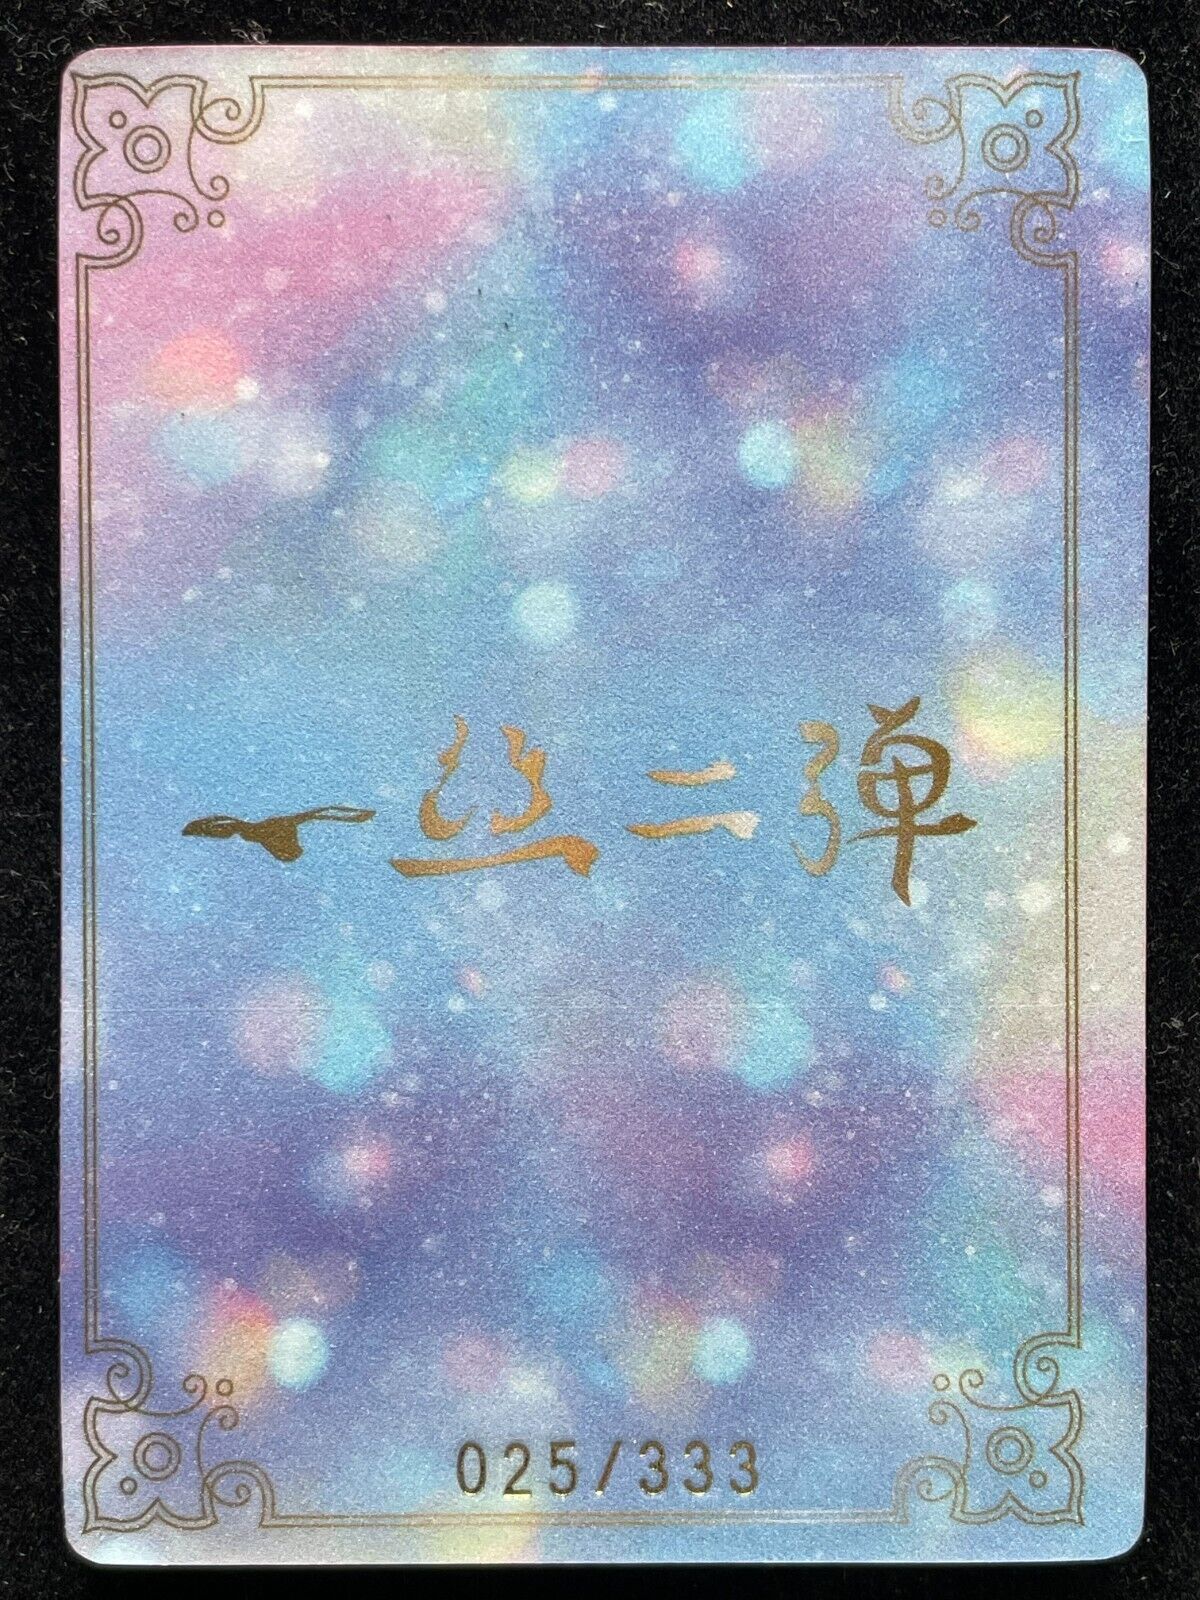 🔥 (25/333) Yelan Genshin Meika 1 shot 2 Goddess Story Anime Waifu Card SK-15 